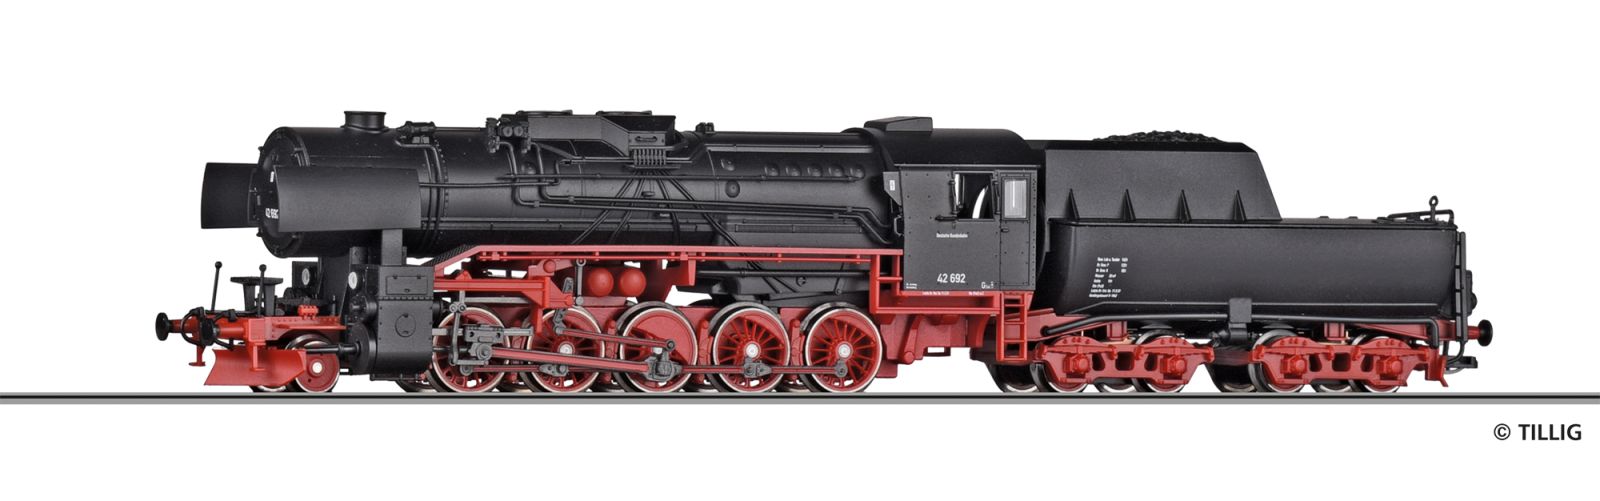 Steam locomotive DB